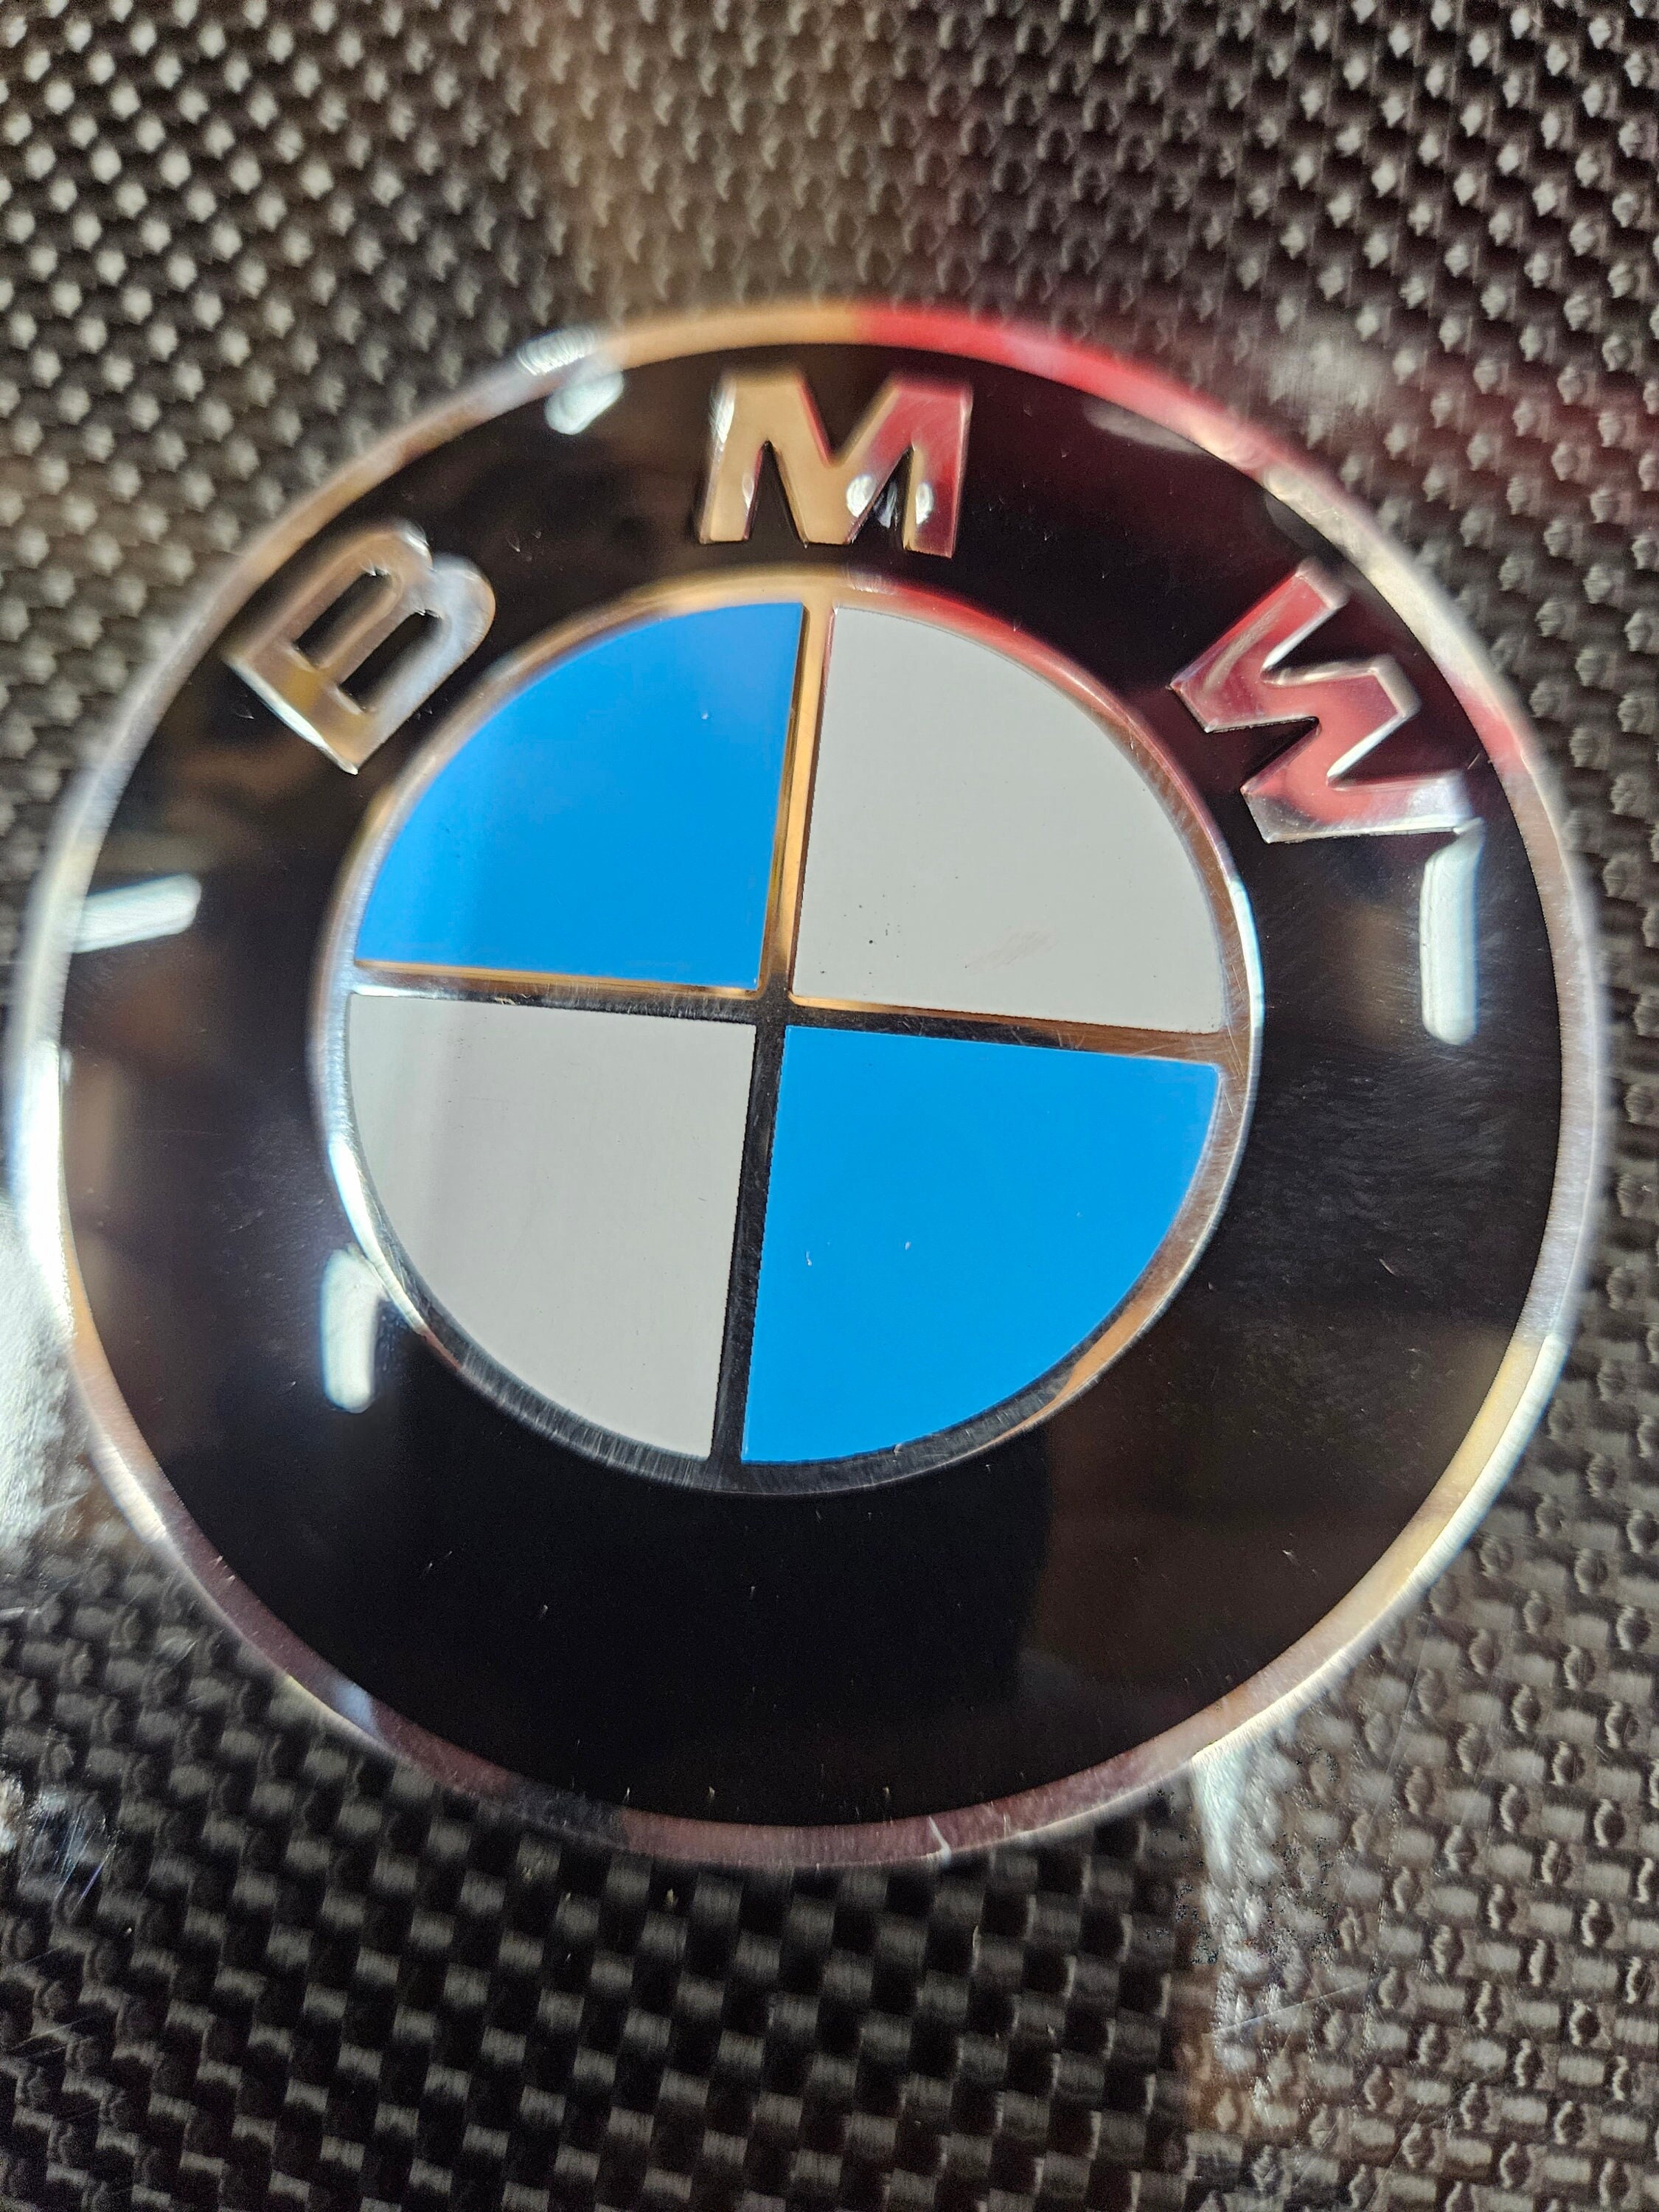 File:BMW 1916-1933 Logo.svg - Wikimedia Commons